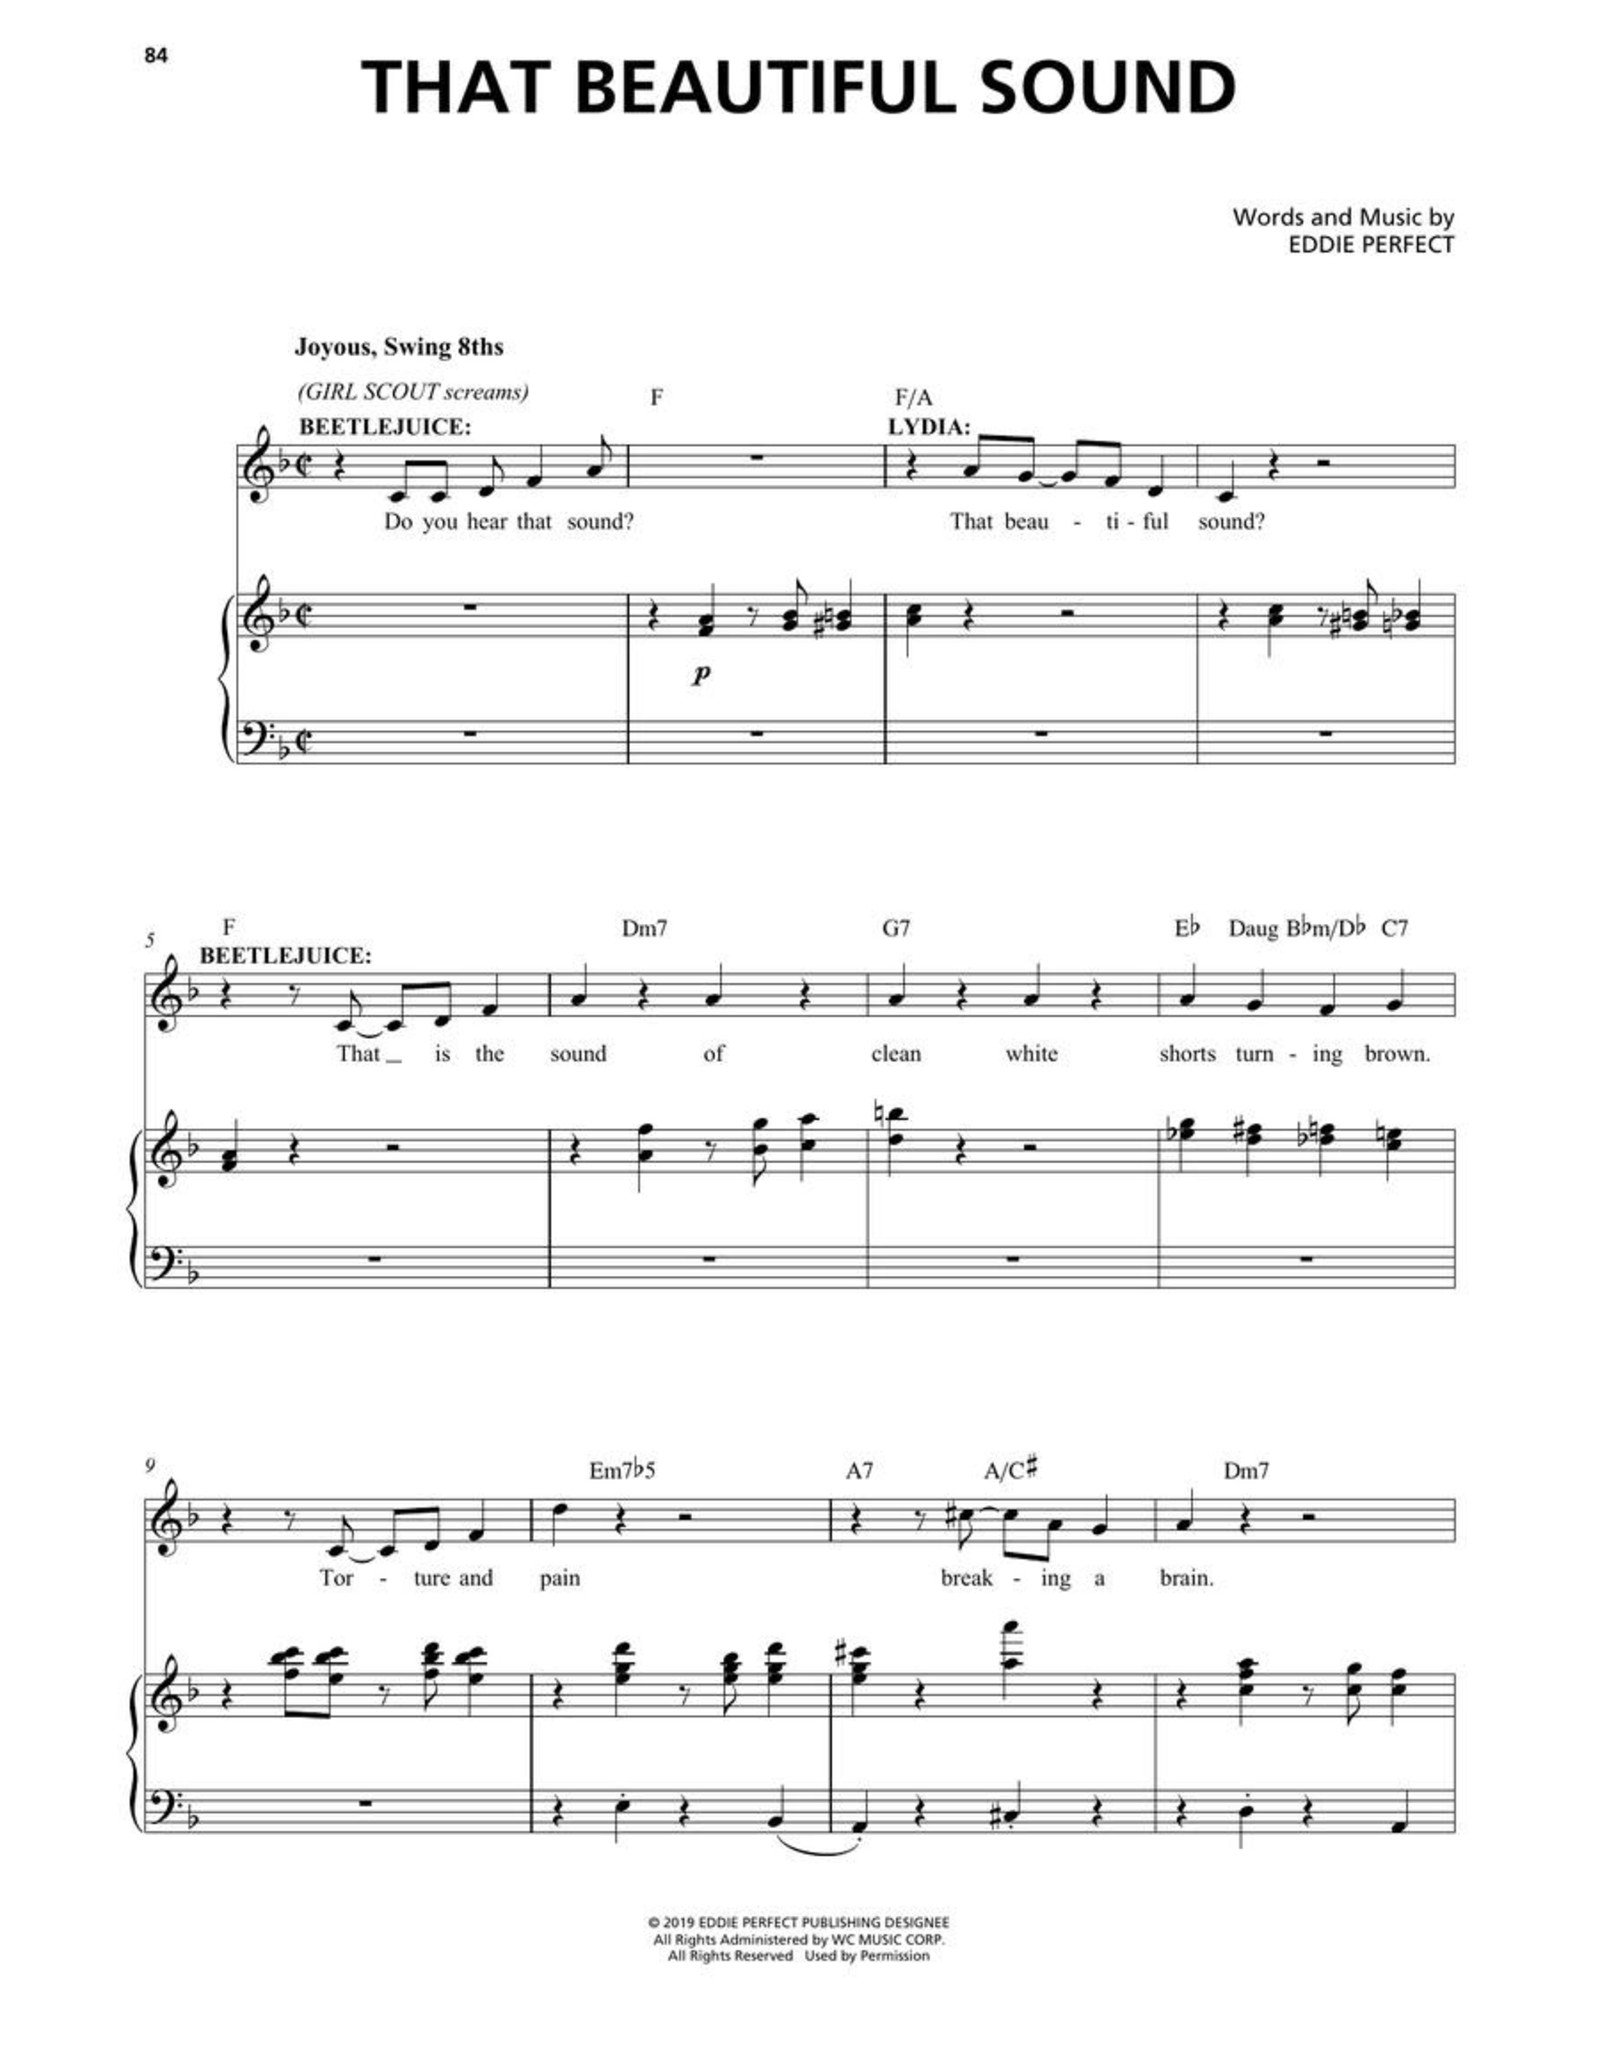 Hal Leonard Beetlejuice the Musical - Vocal Selections